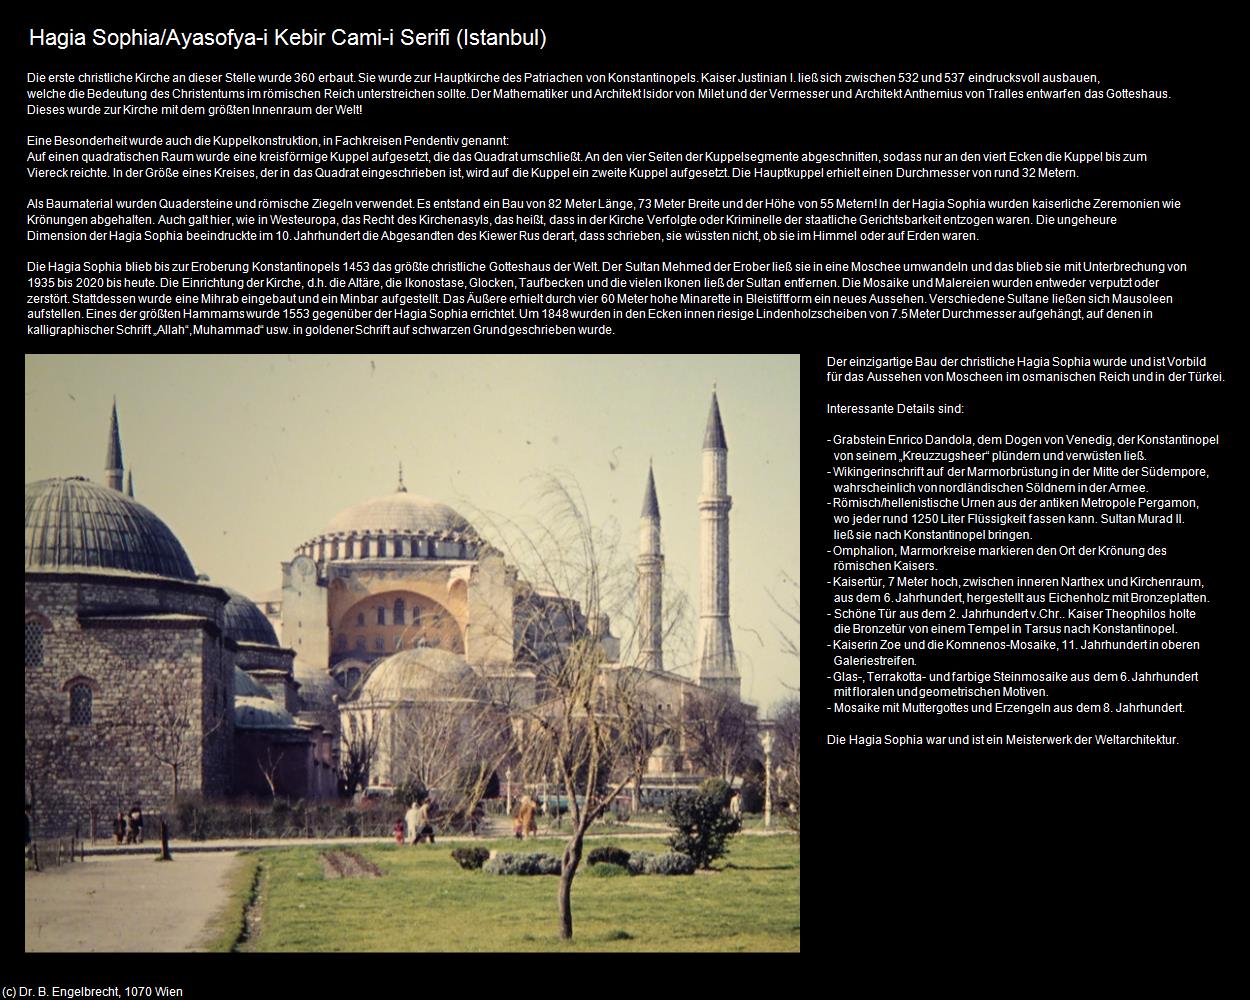 Ehem. Hagia Sophia/Ayasofya-i Kebir Cami-i Serifi (Istanbul) in TÜRKEI